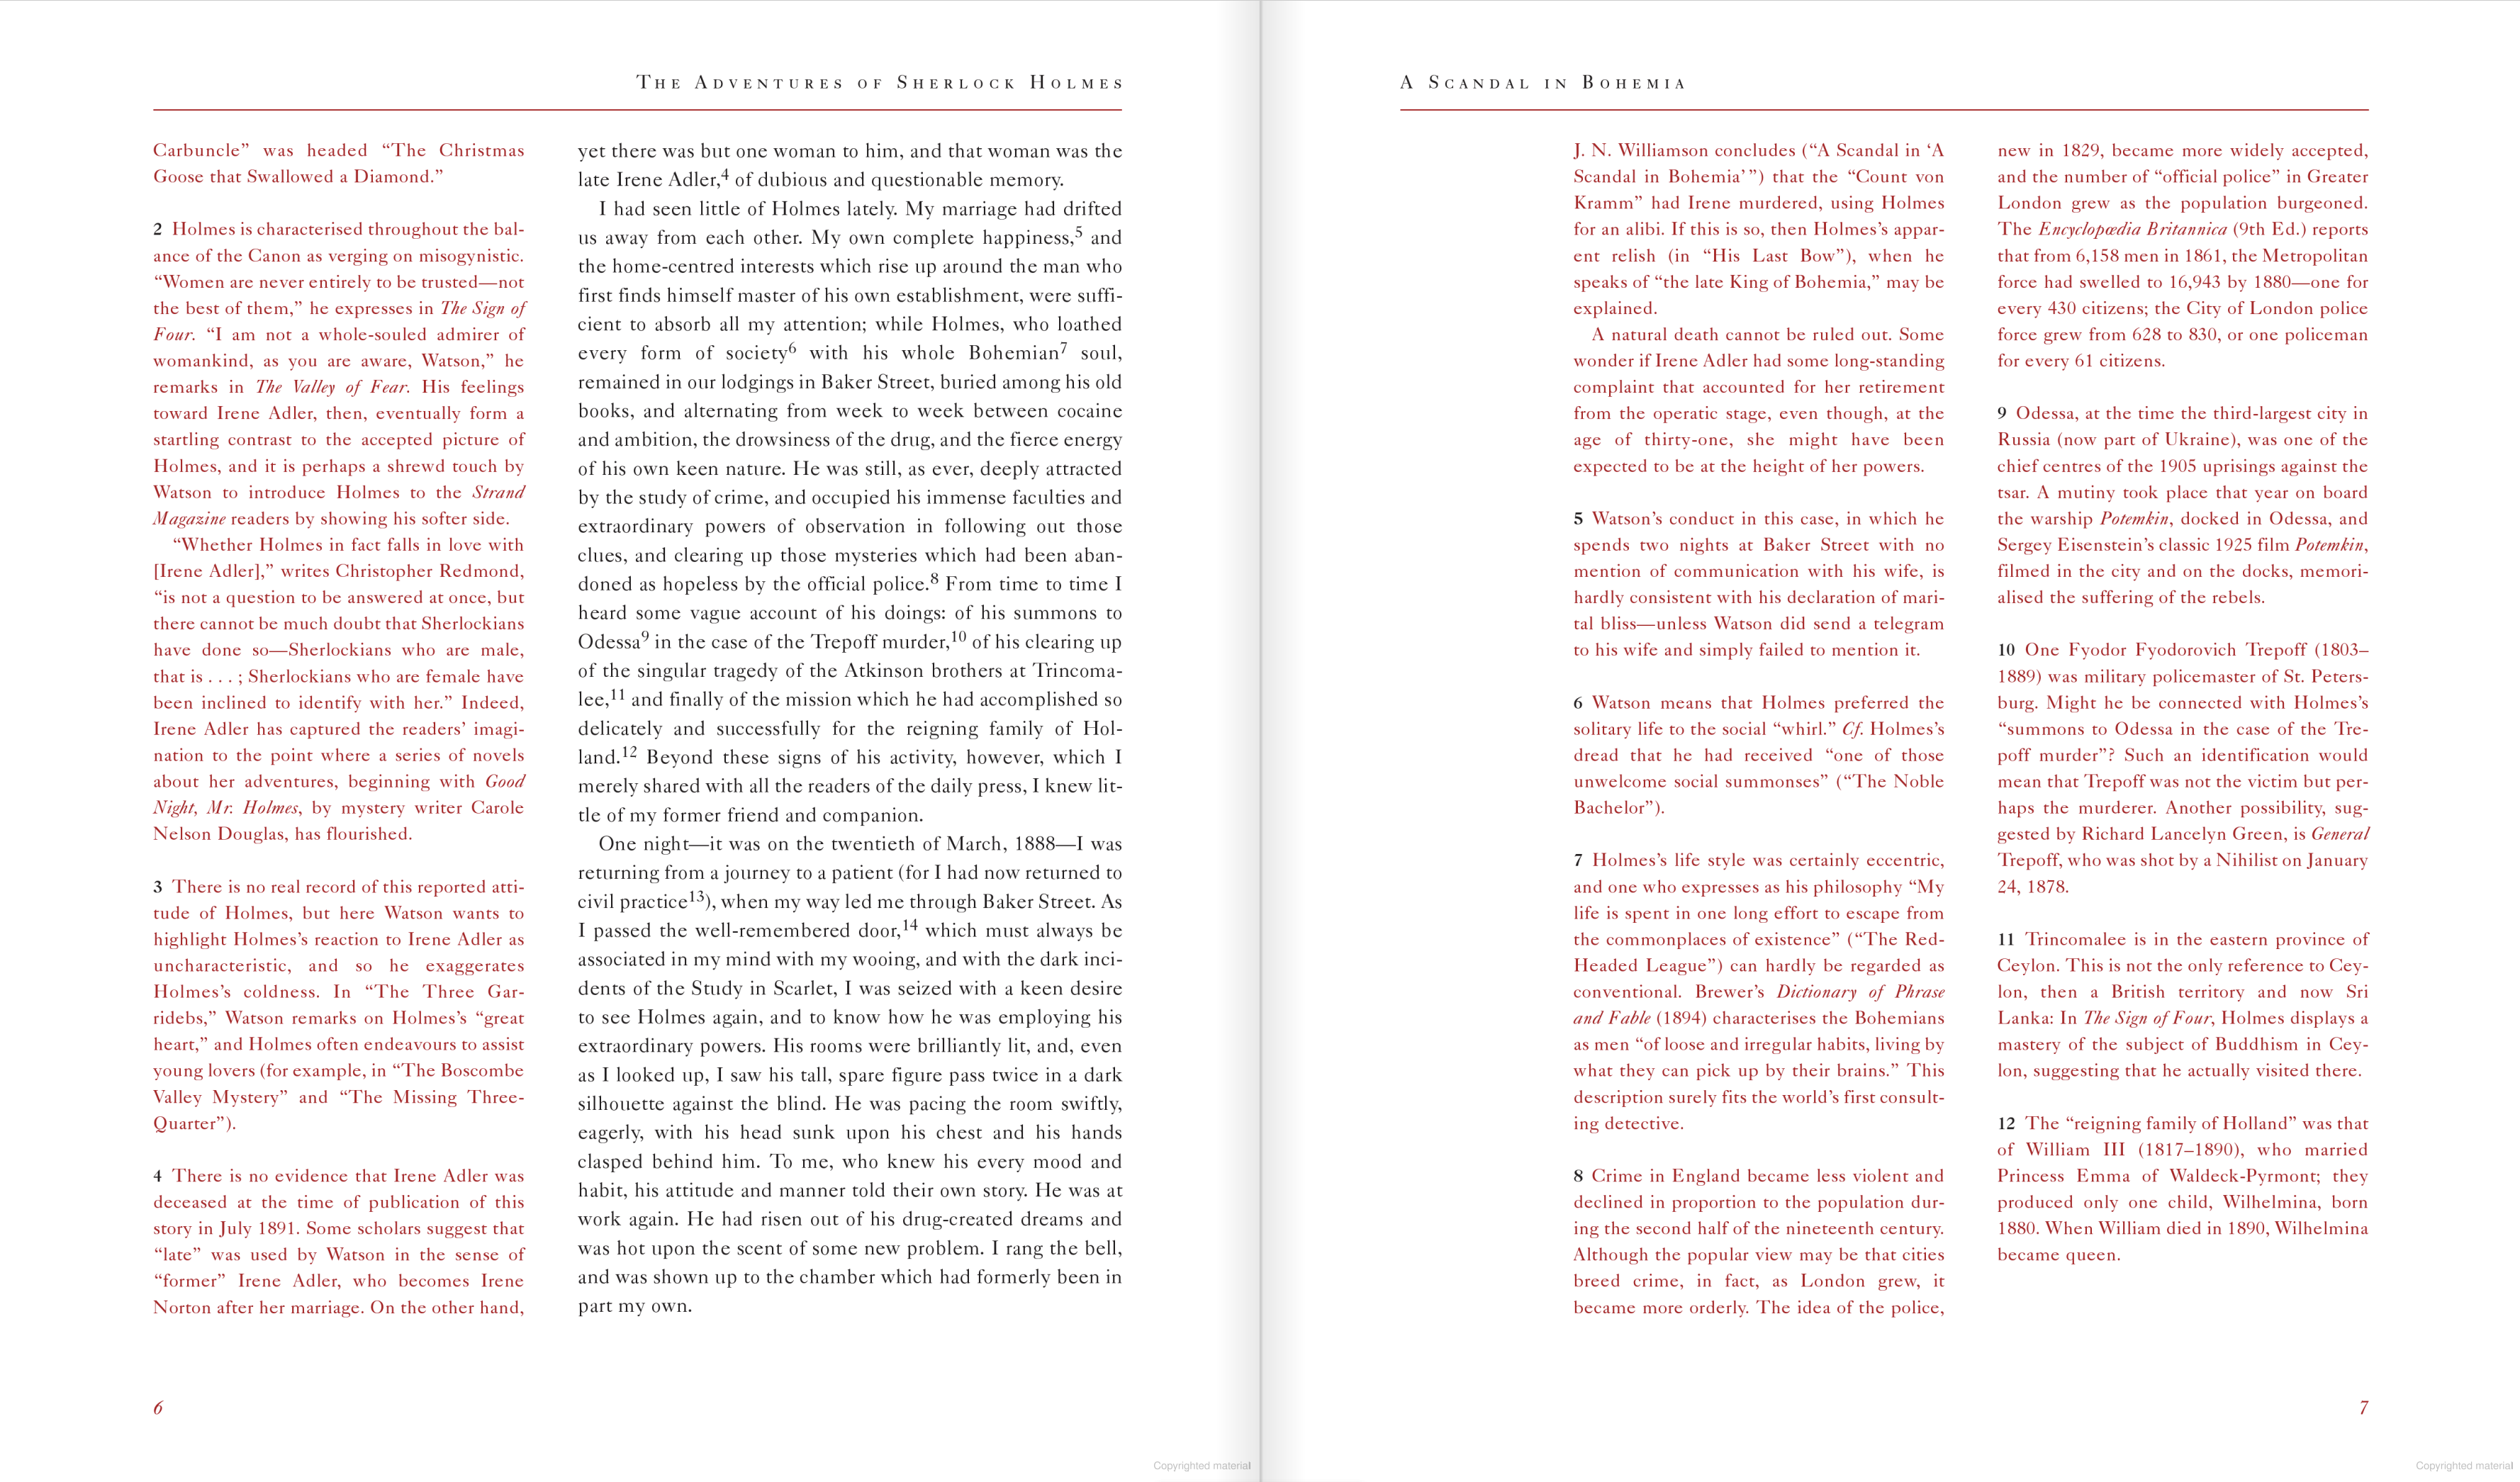 The New Annotated Sherlock Holmes Vol. 1, Leslie Klinger